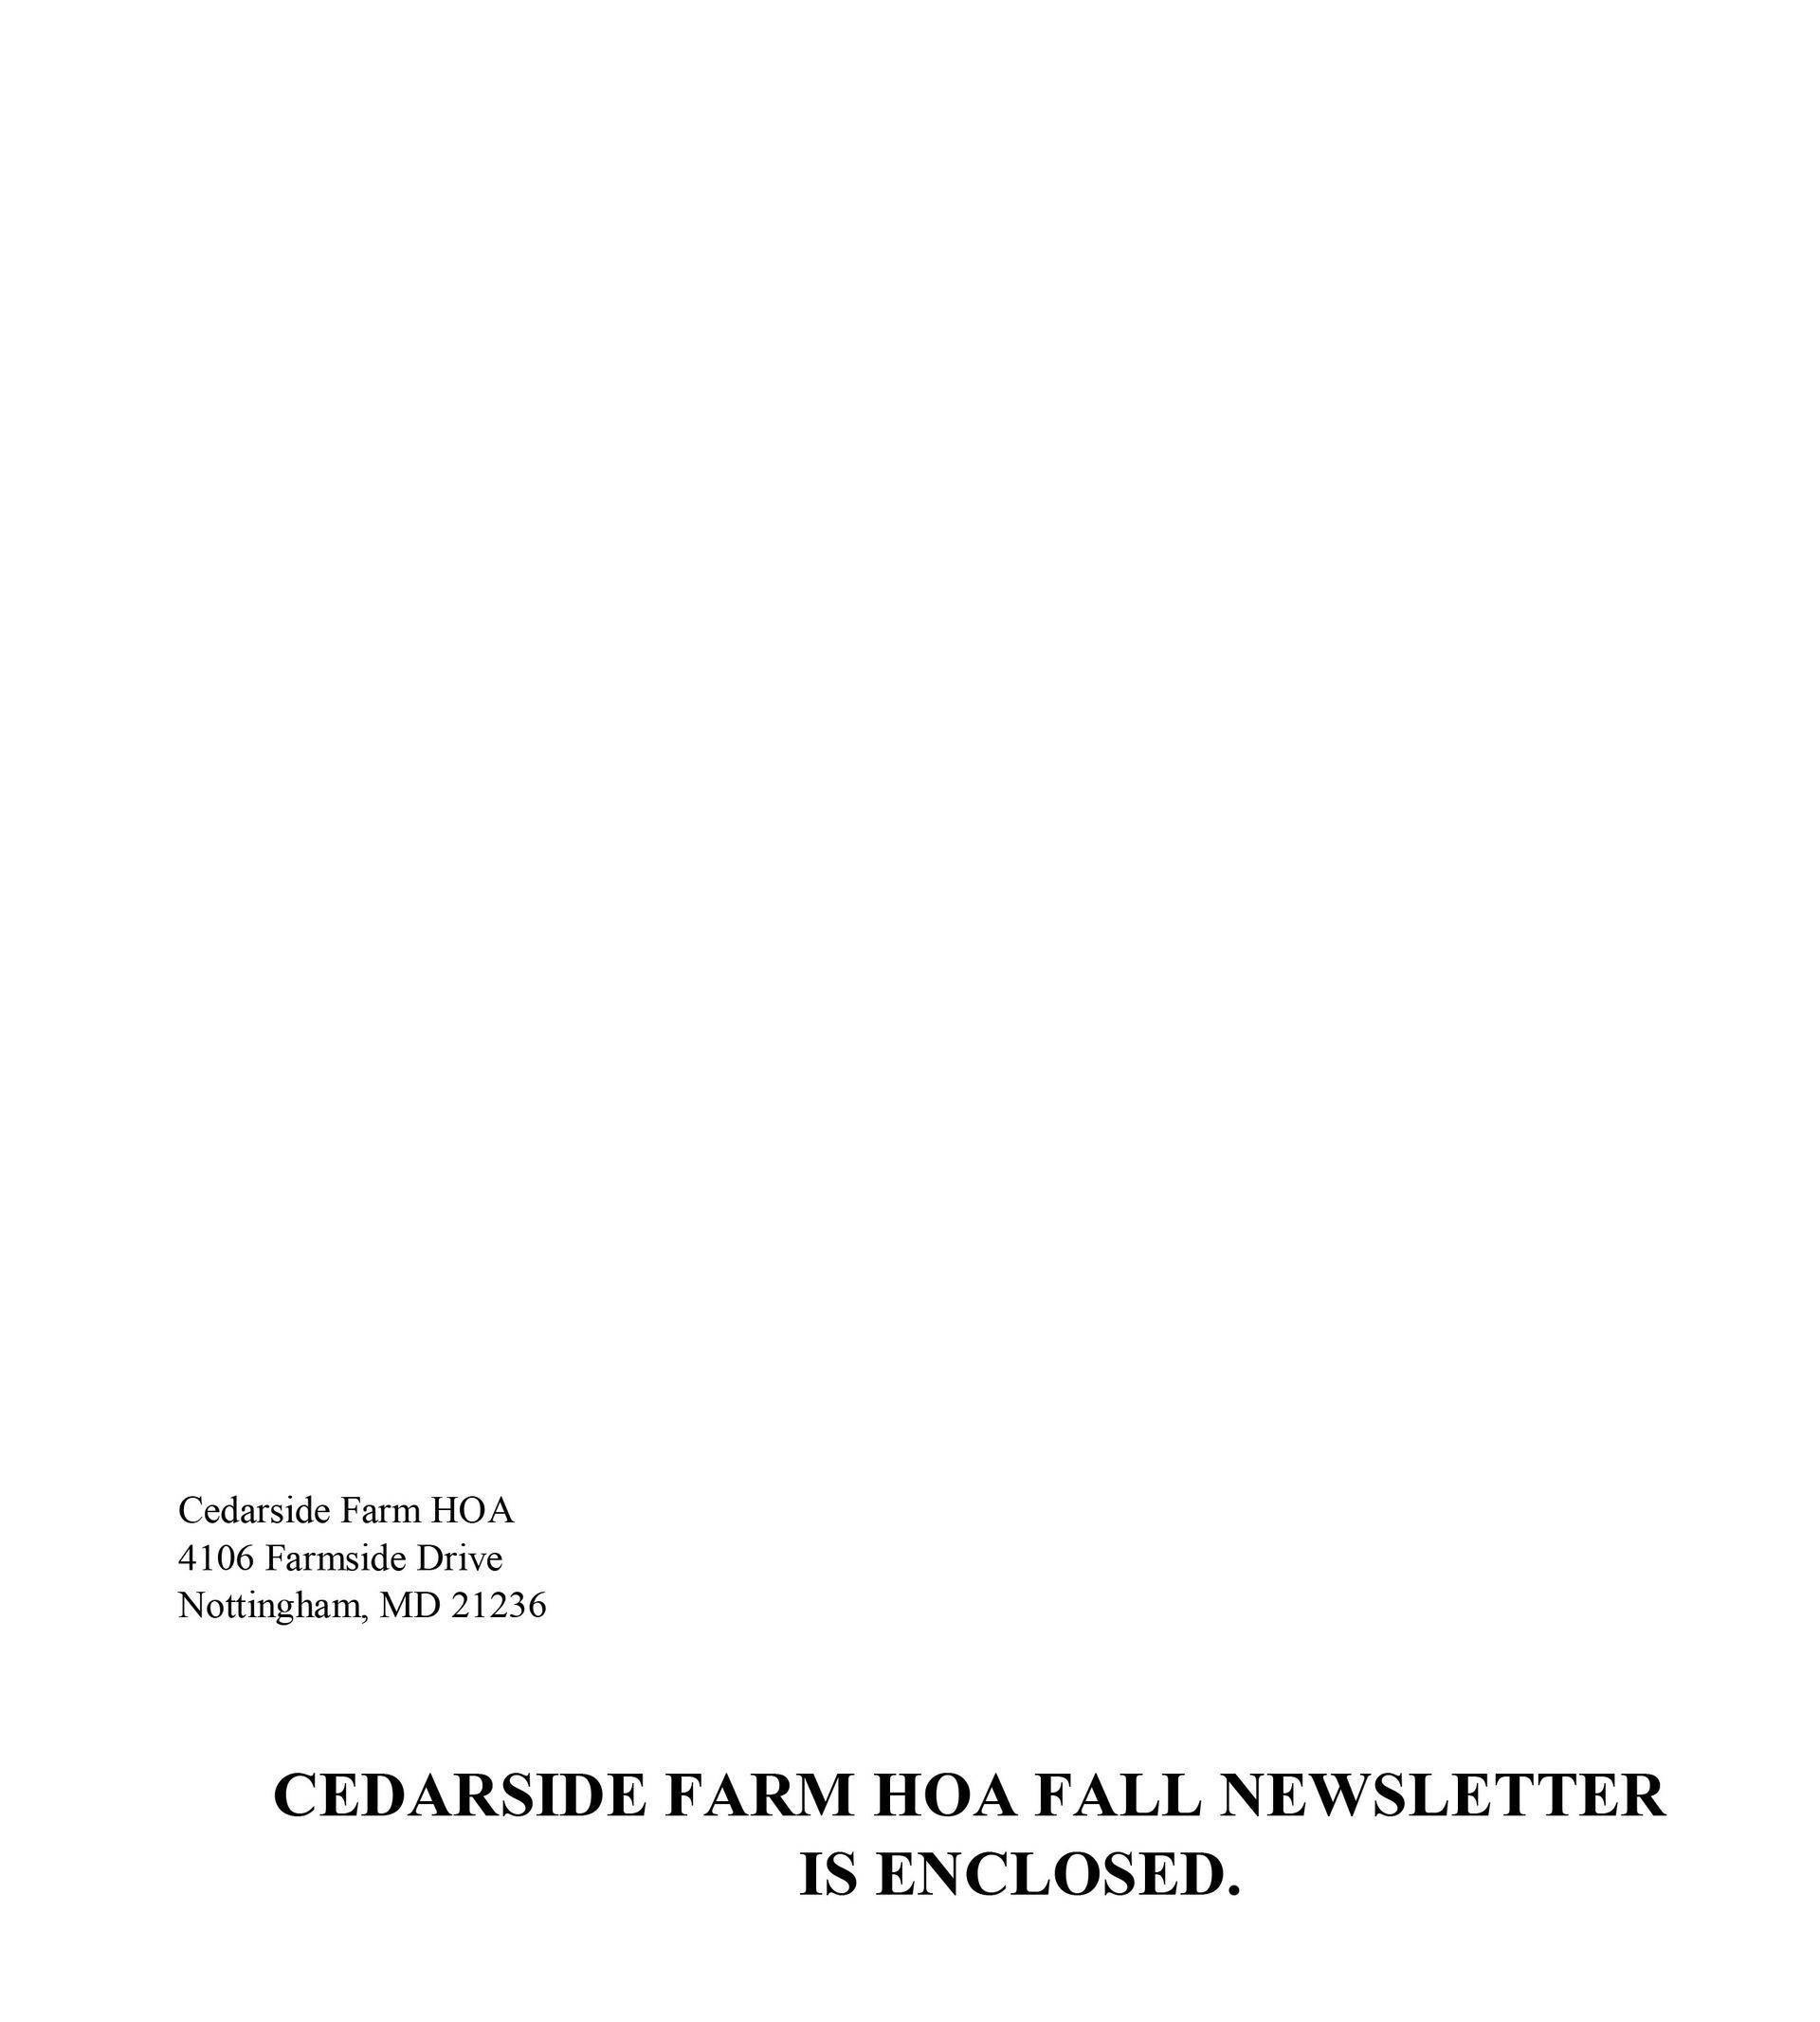 Cedarside Farm HOA Inc. Newsletter Fall 2022